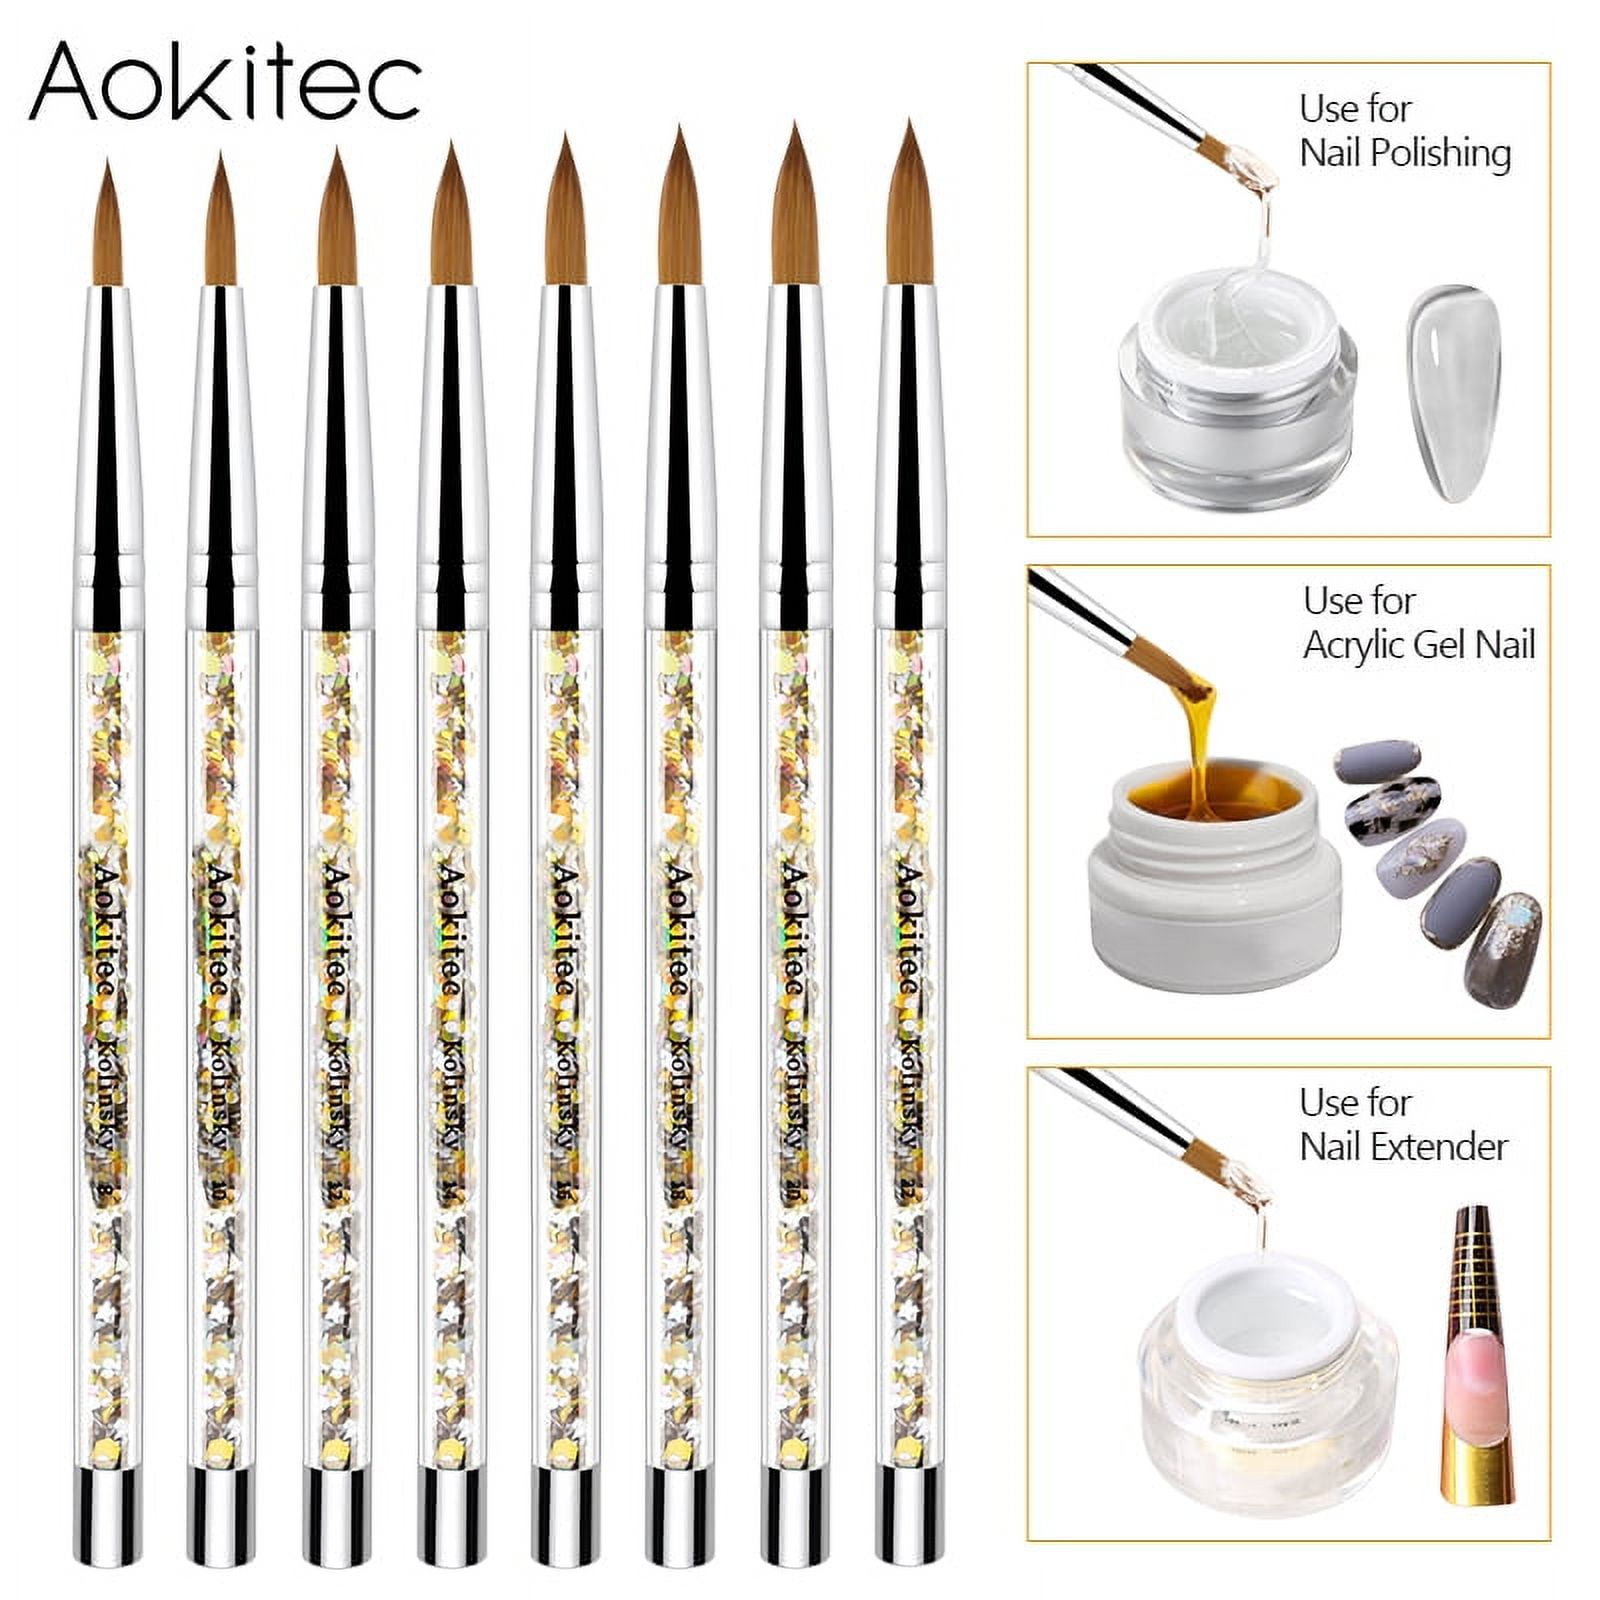 Aokitec Kolinsky Acrylic Nail Brush Art Magic Sequins Glitter Handle Sizes 8 22 bb6f5db1 9a7a 48d6 a741 a69b2fa82be9.f83b351a271a4b74dc9805240395fe8c